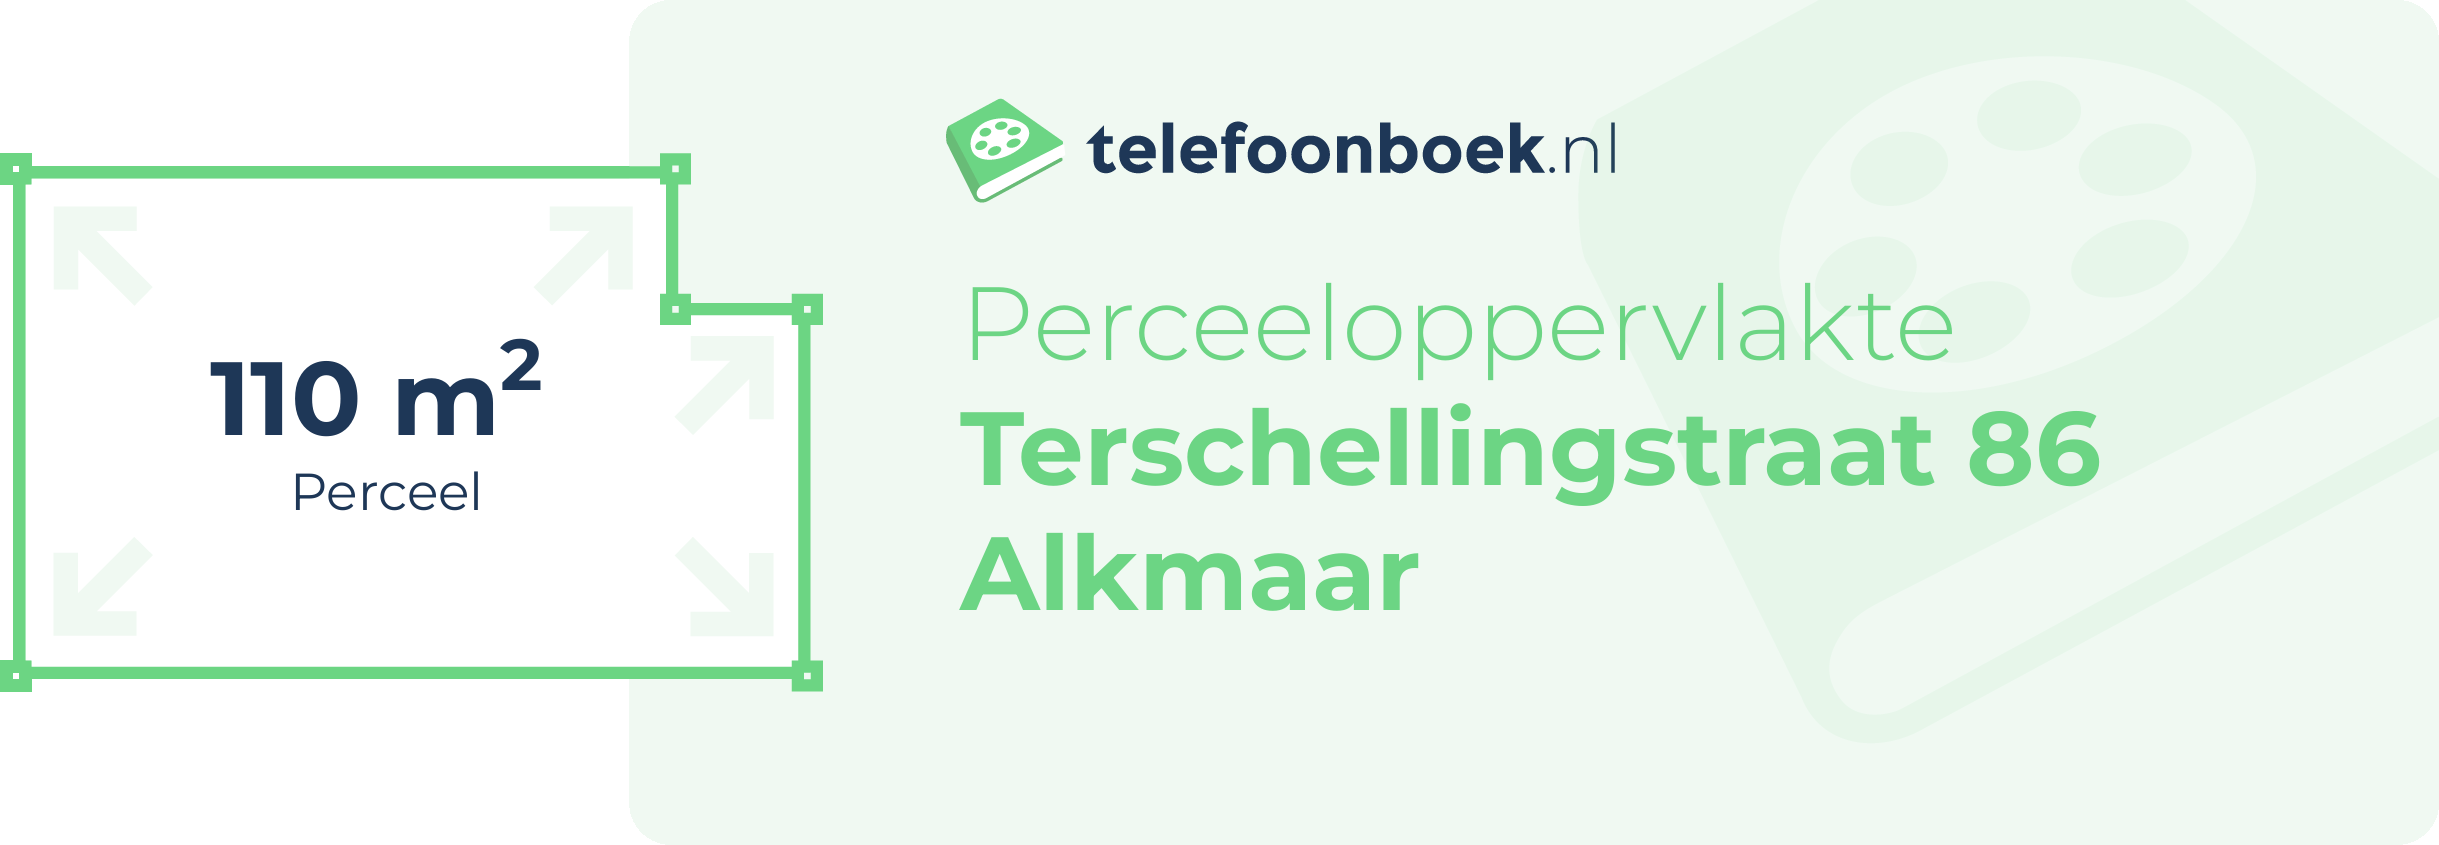 Perceeloppervlakte Terschellingstraat 86 Alkmaar